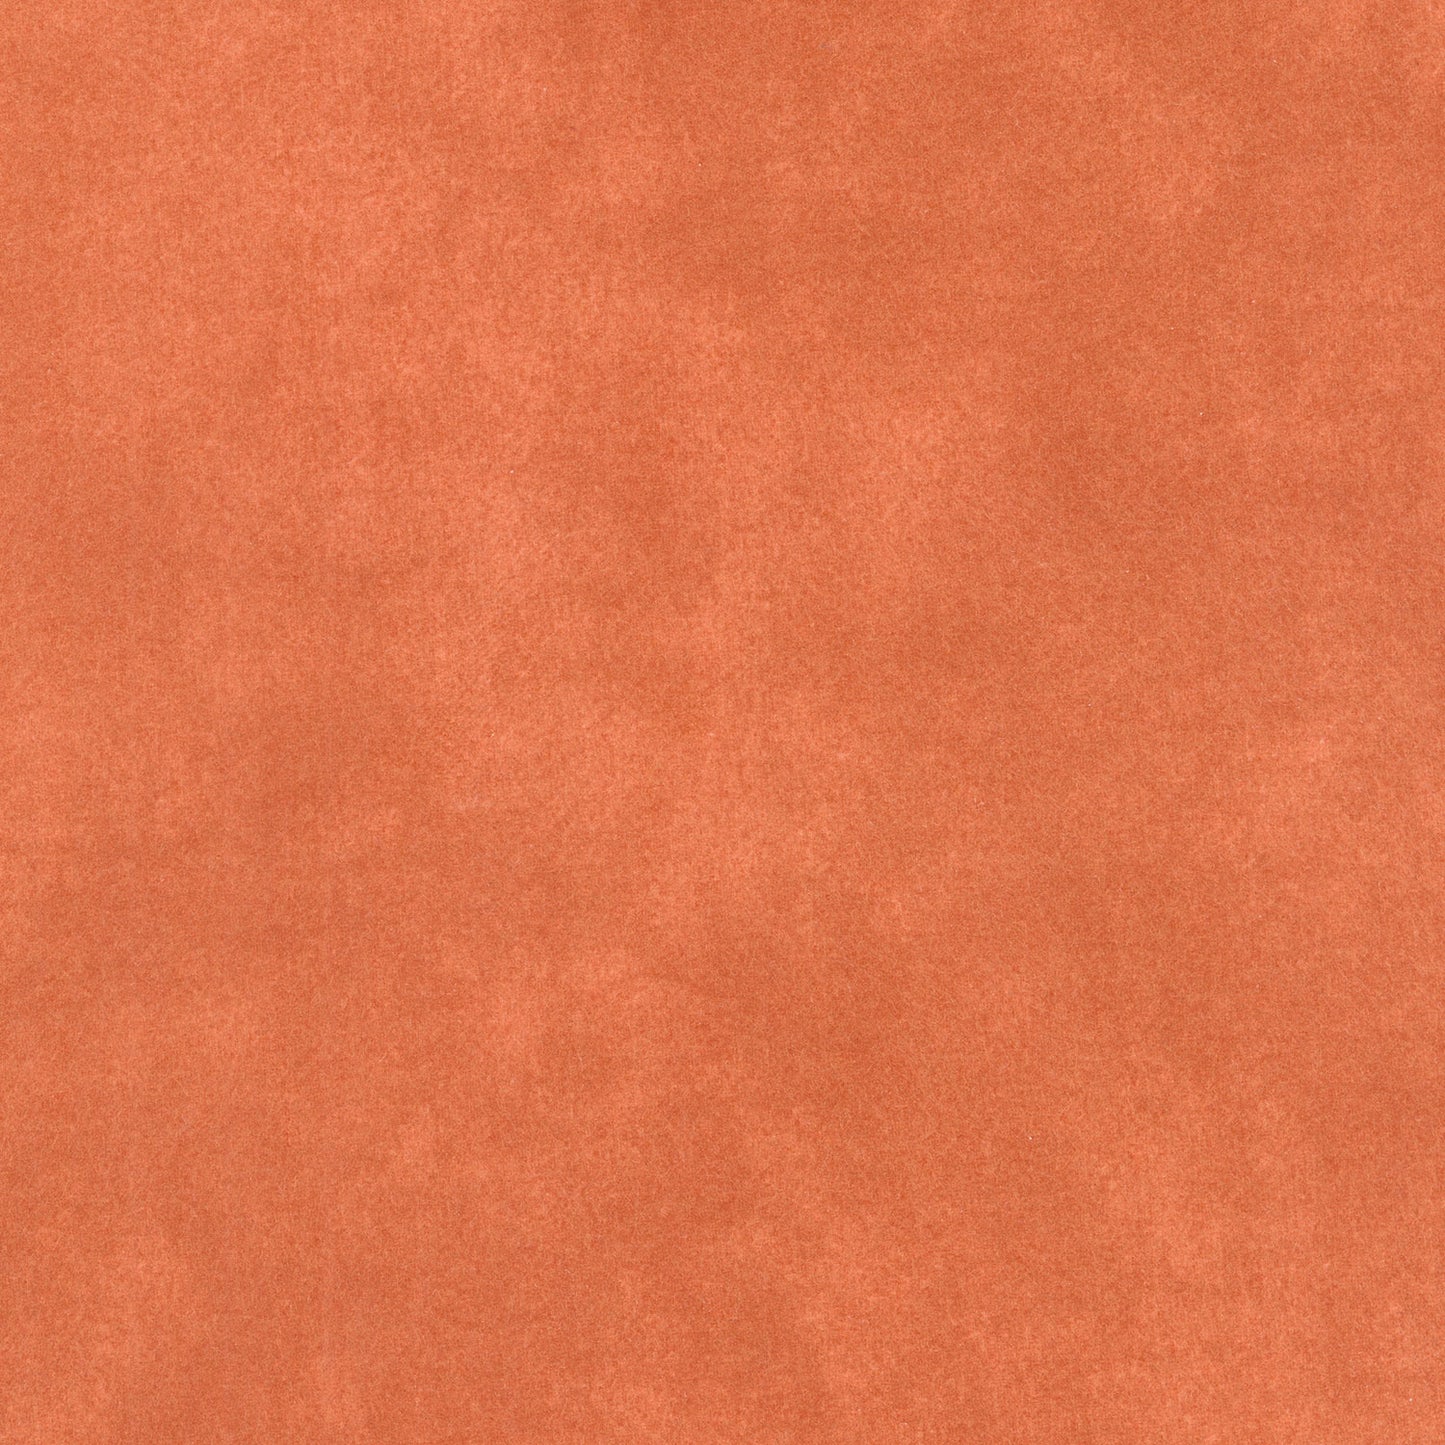 Woolies Flannel - Colorwash - Medium Orange Yardage Primary Image